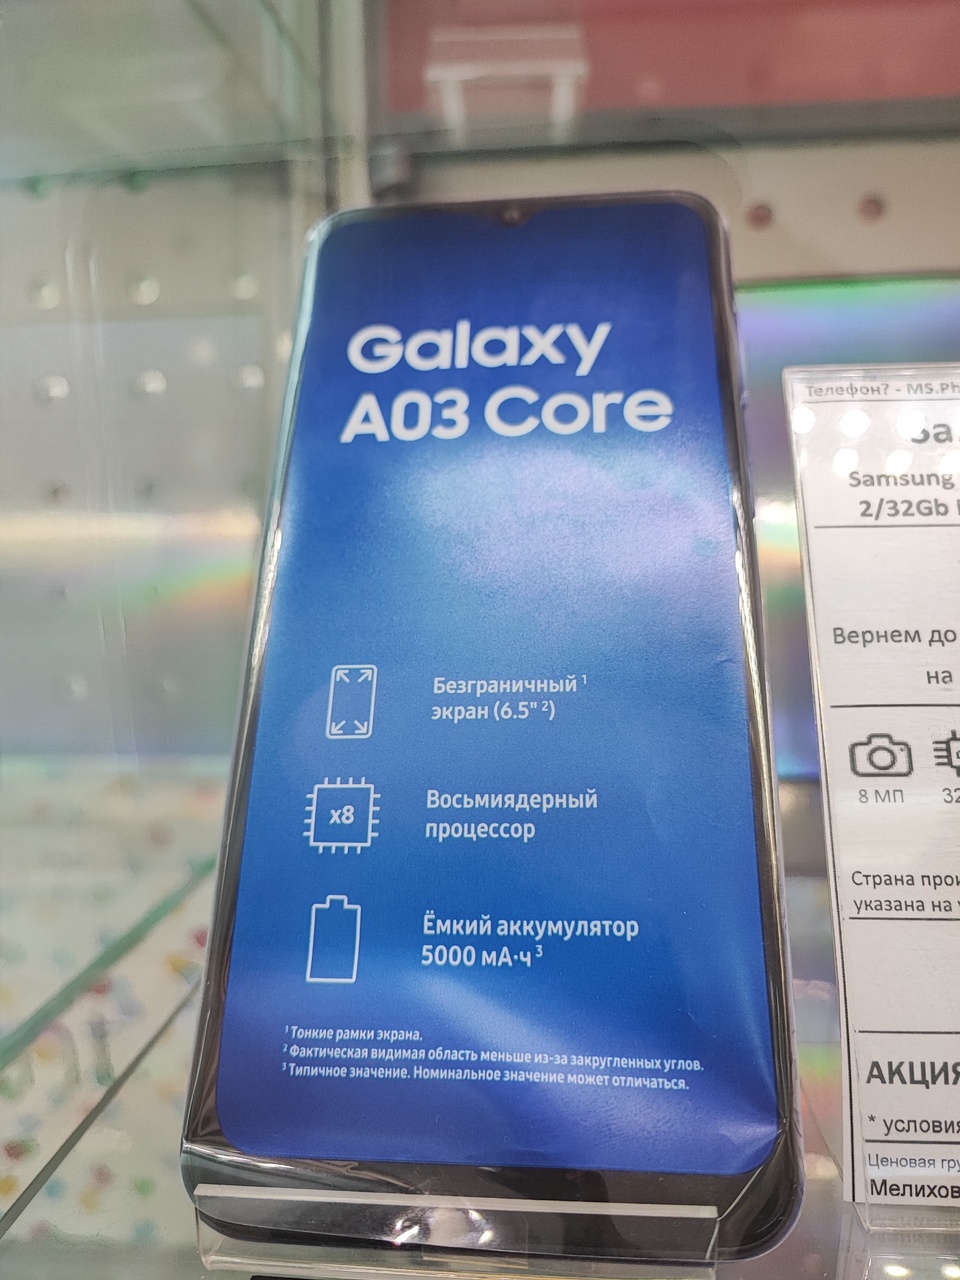 Samsung A03 Core 32gb - 9 490 ₽, заказать онлайн.